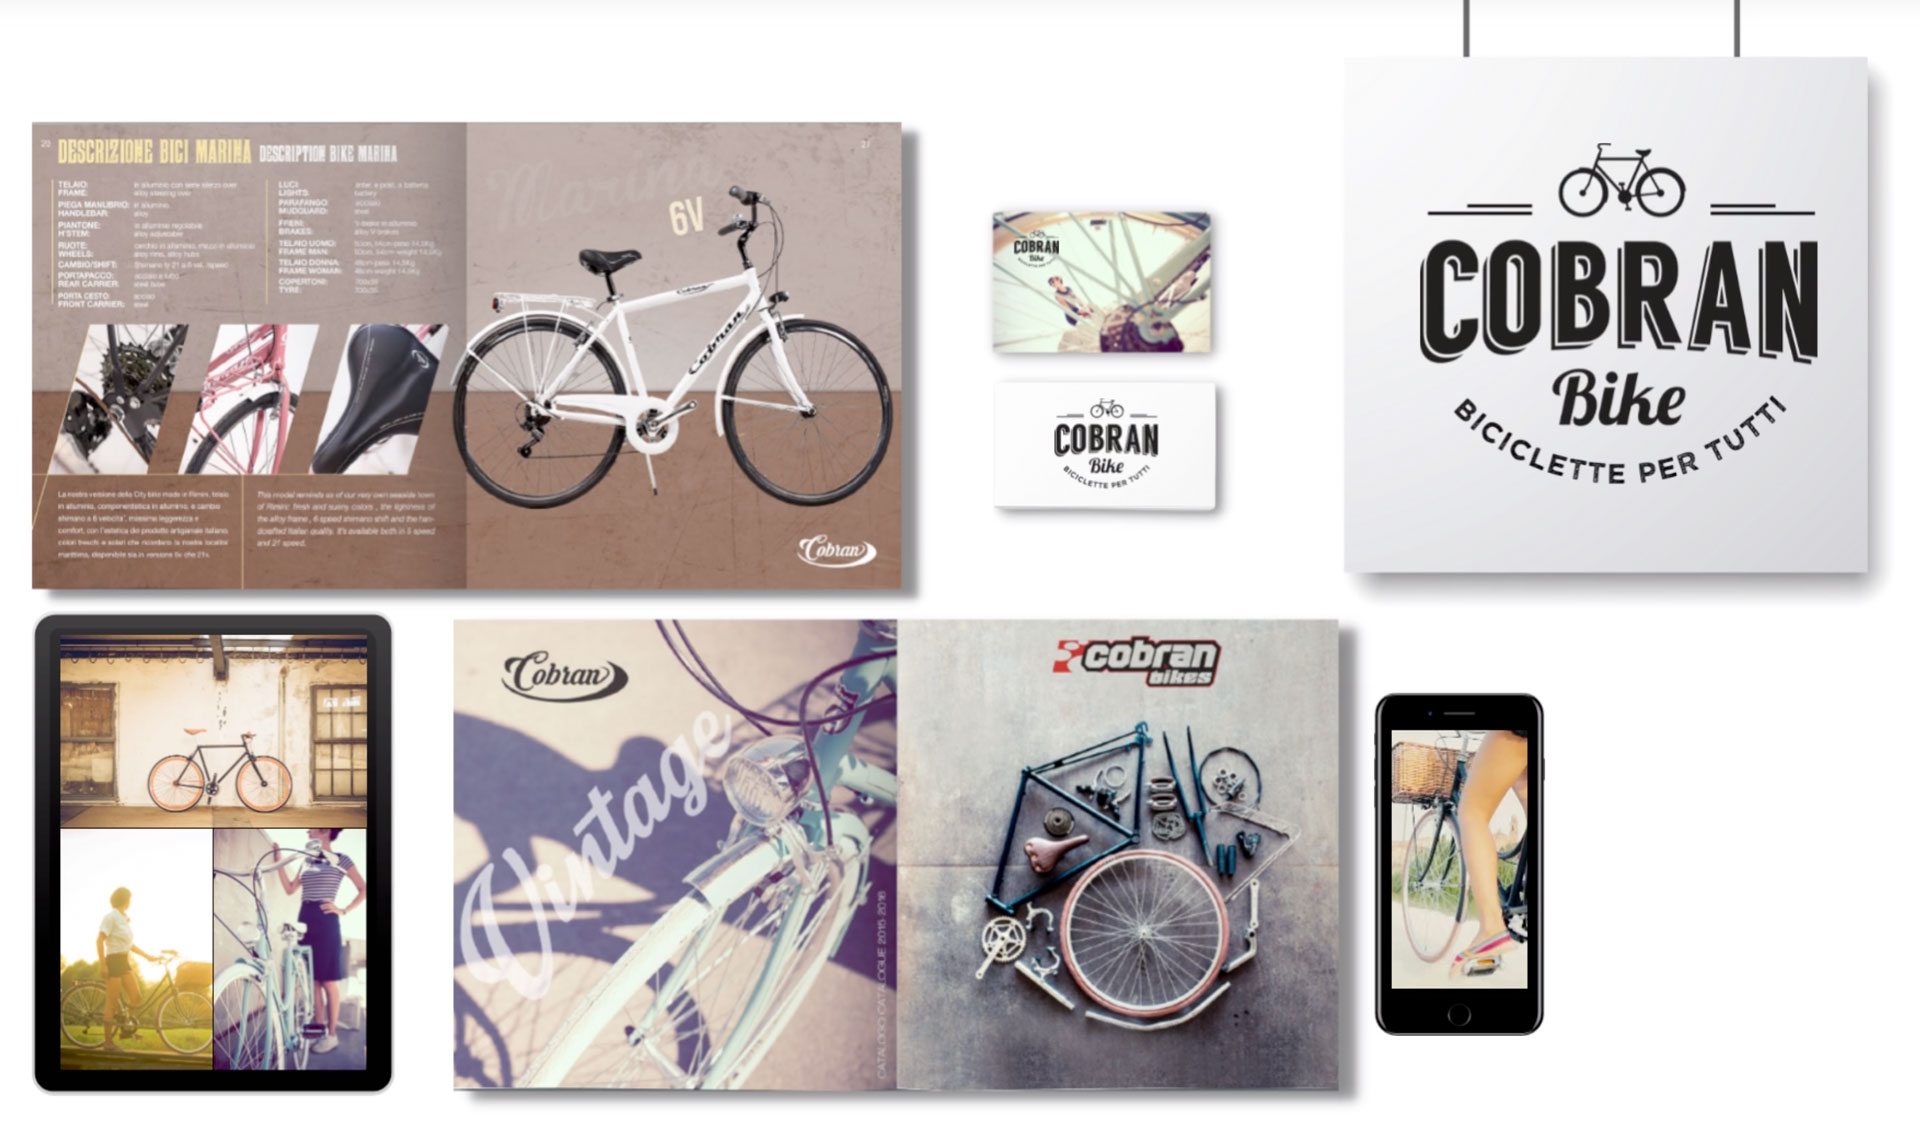 cobran-bike-materiale-pubblicitario